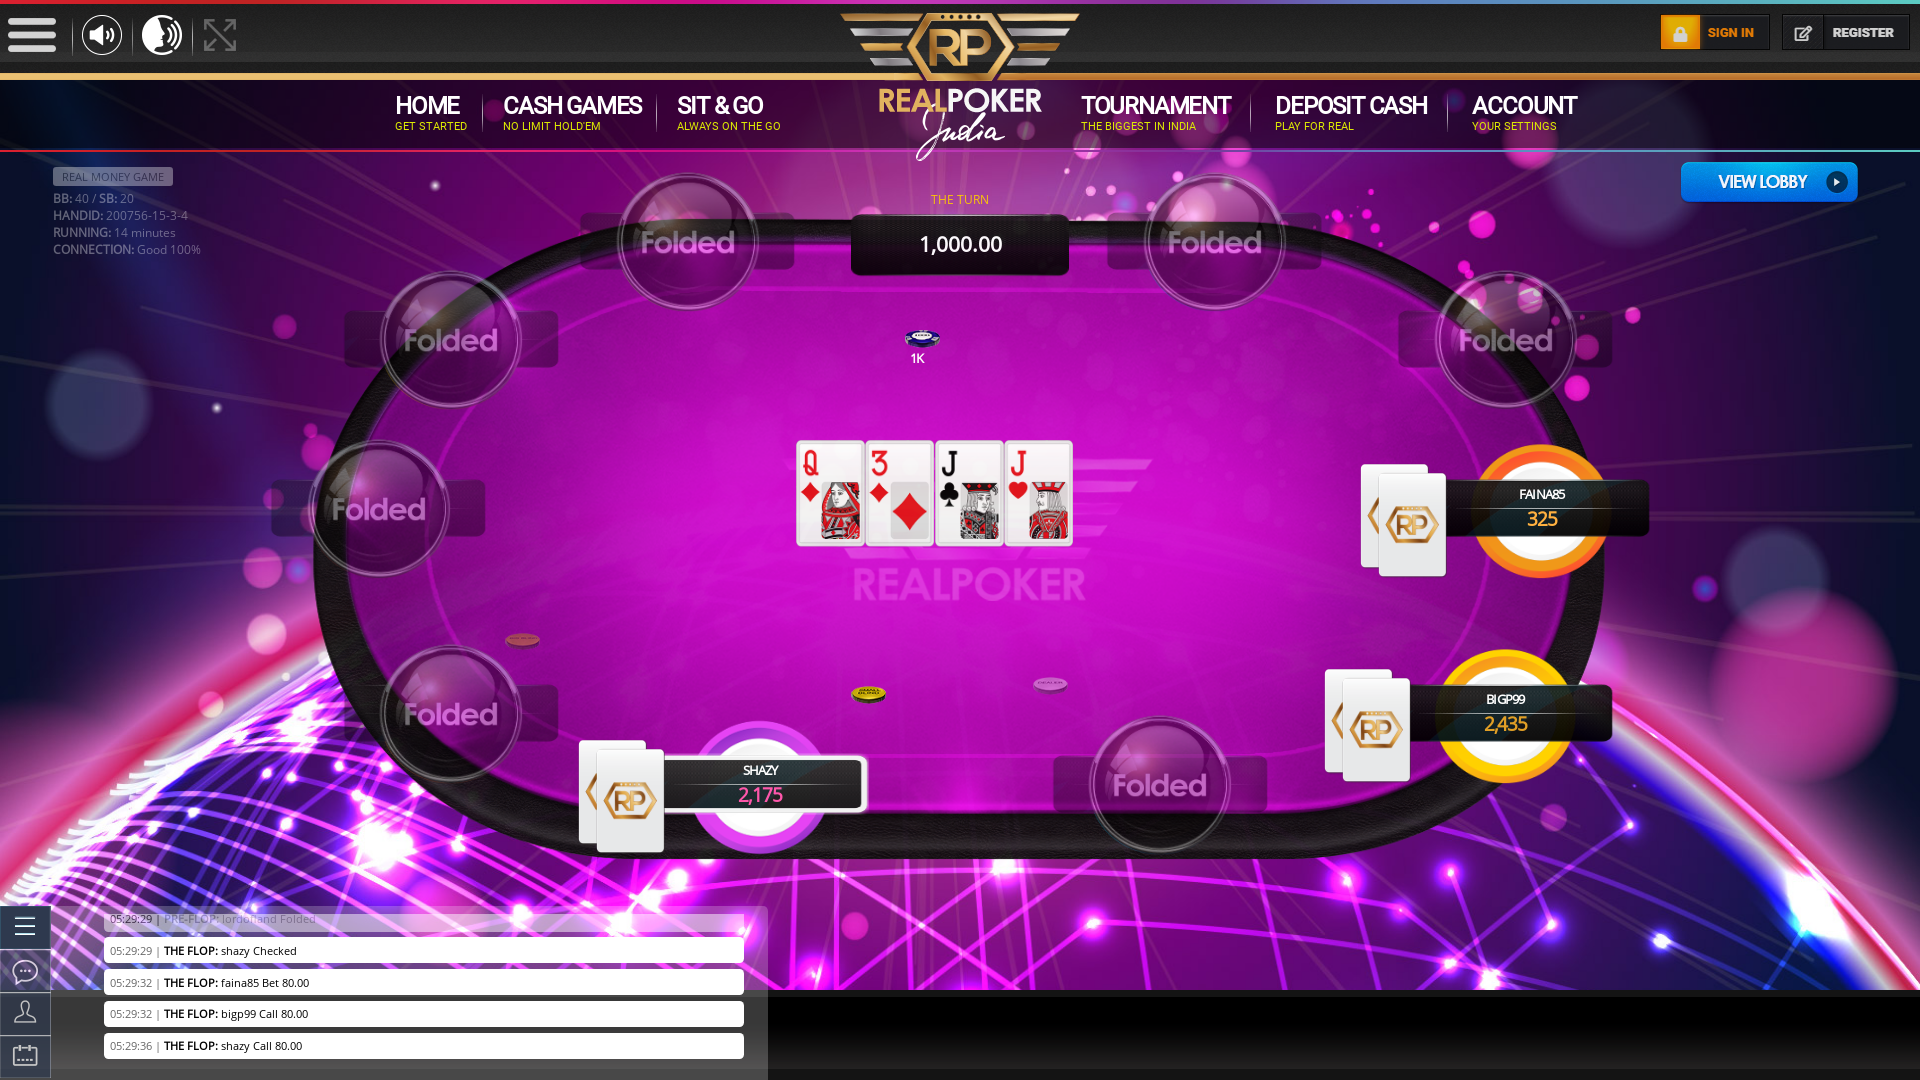 KR Puram, Bangalore online Indian poker